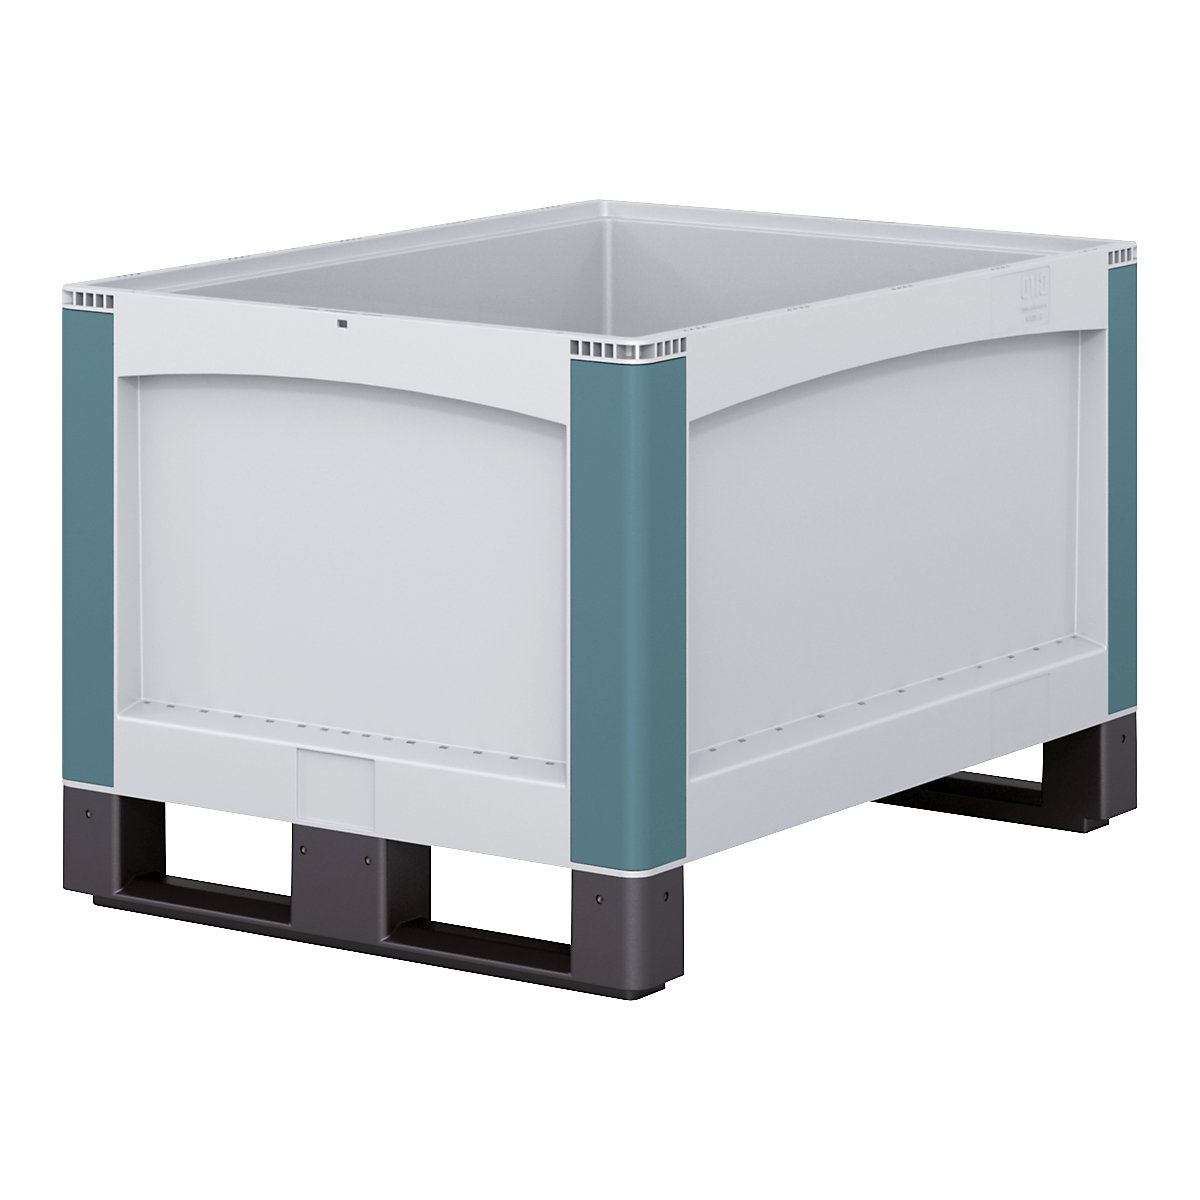 SL heavy duty container - BITO